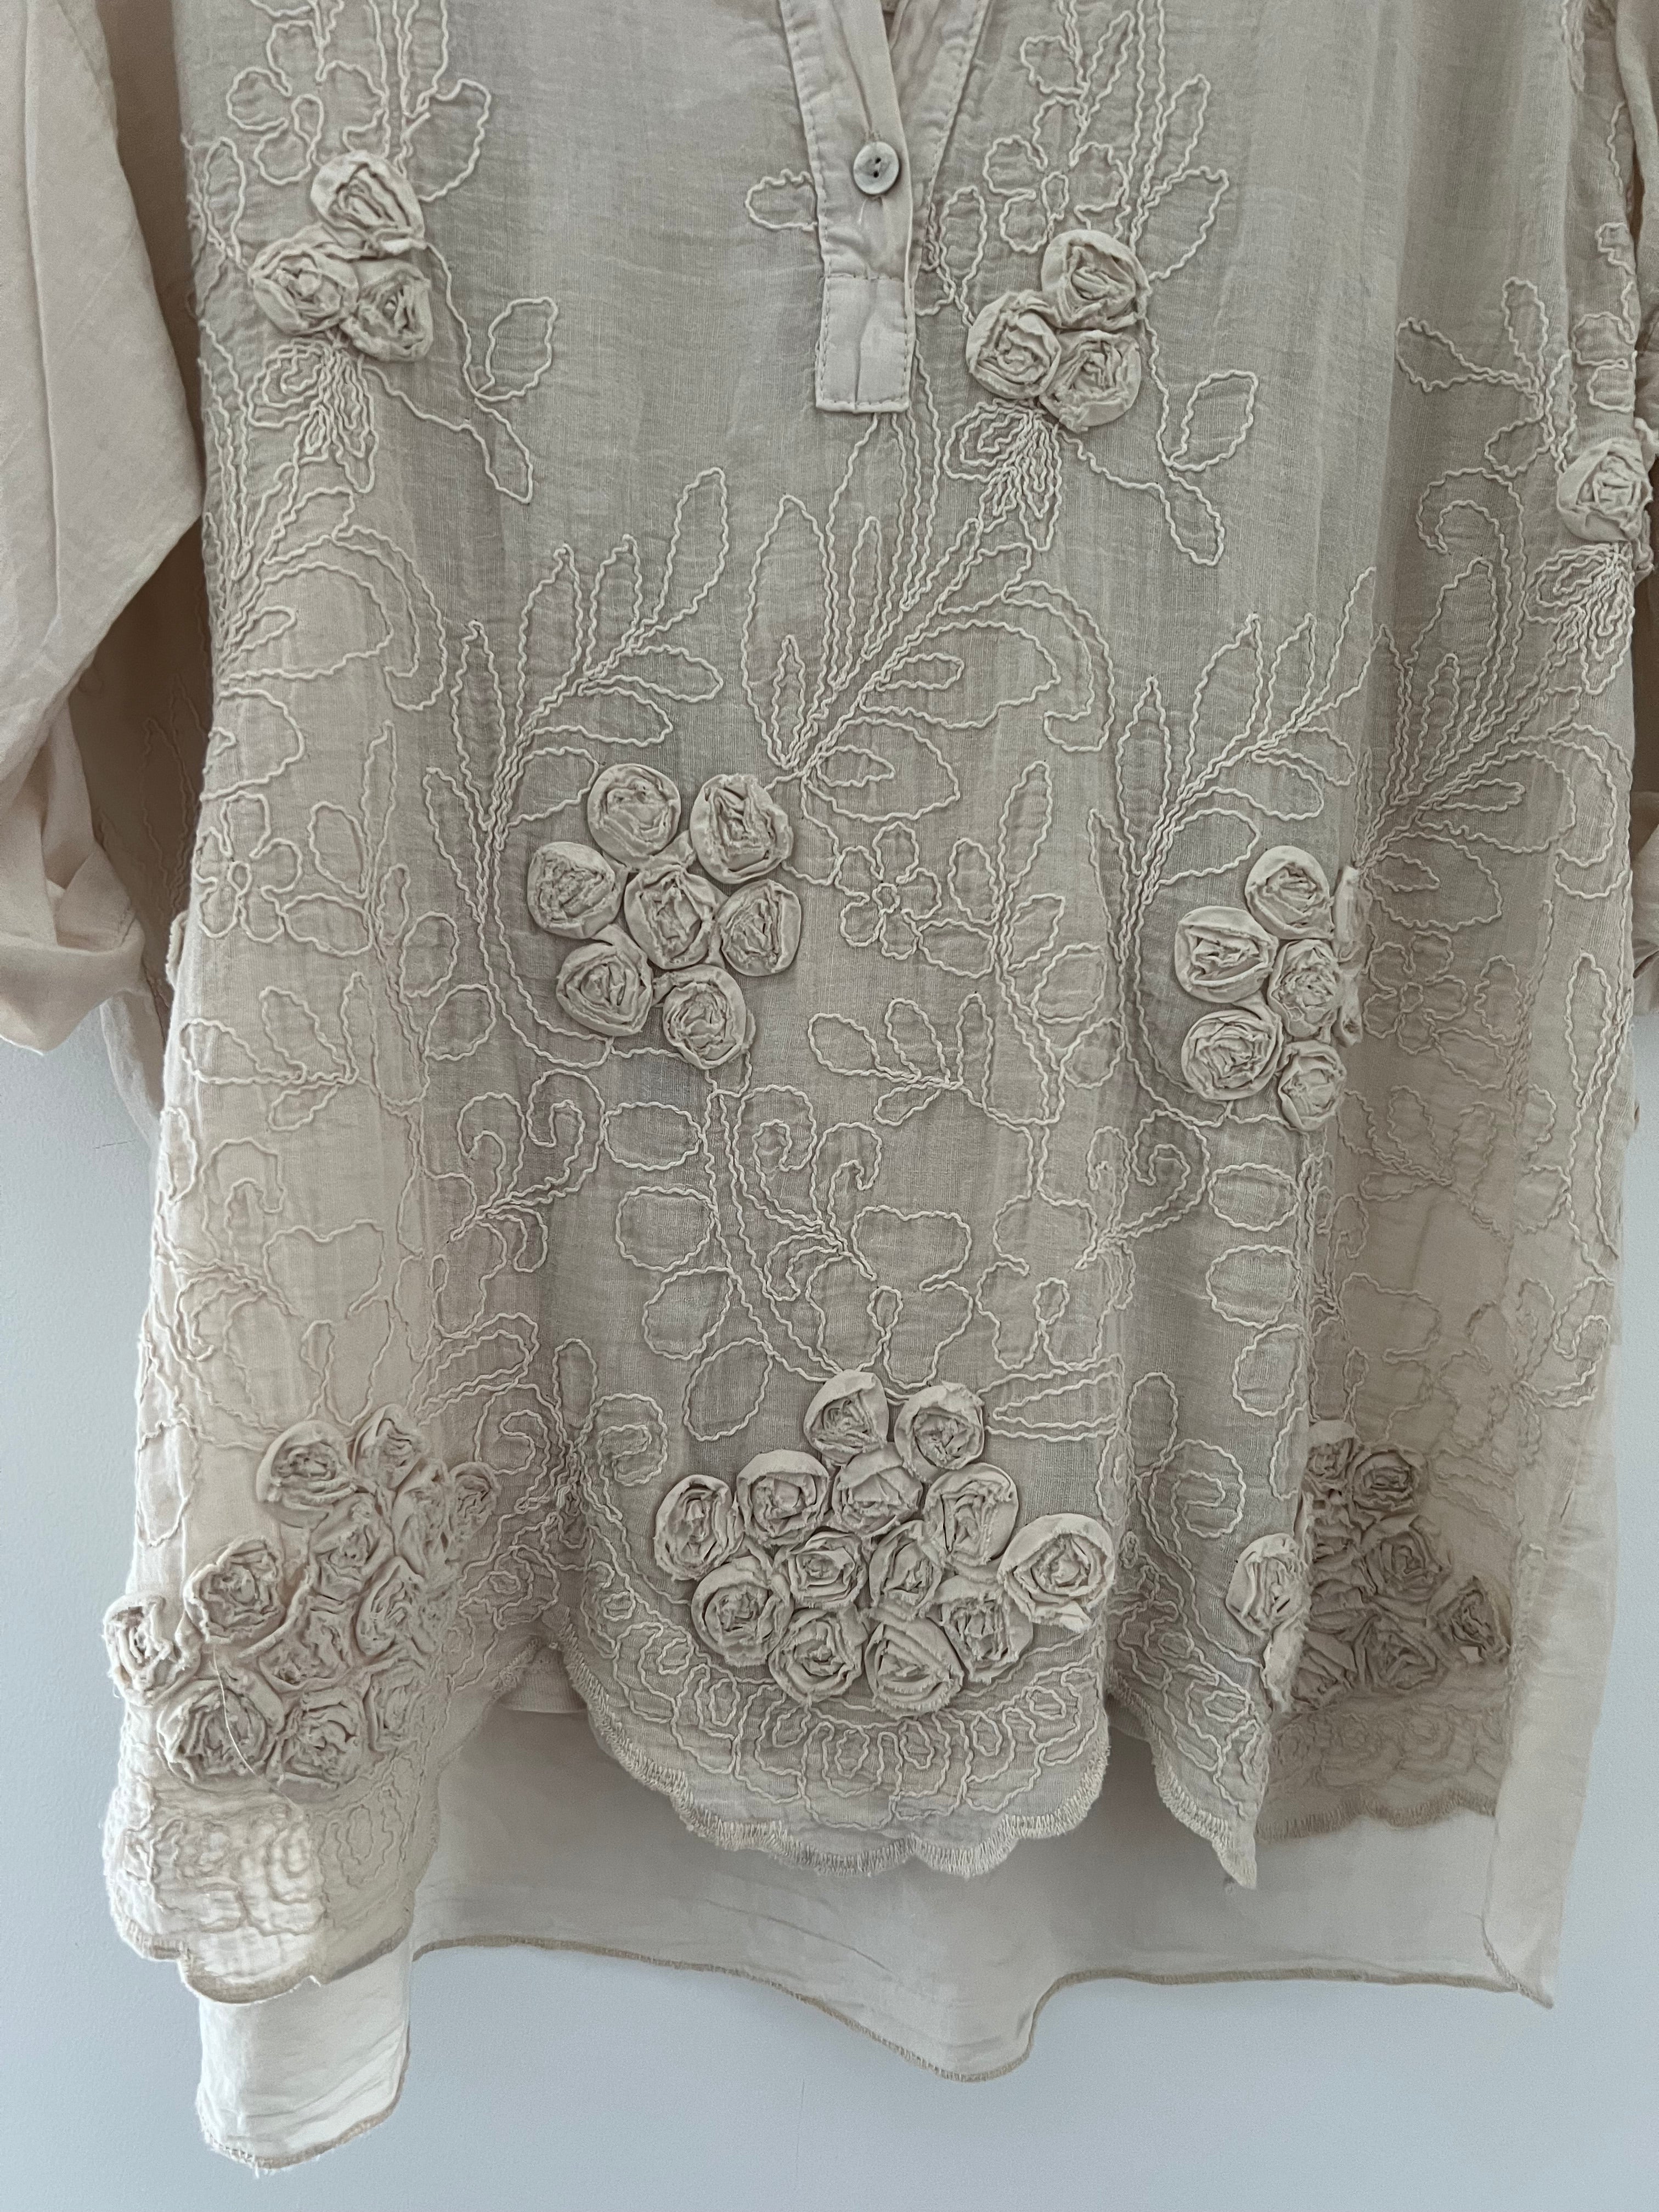 Flower Cotton Shirt & Cami in Stone